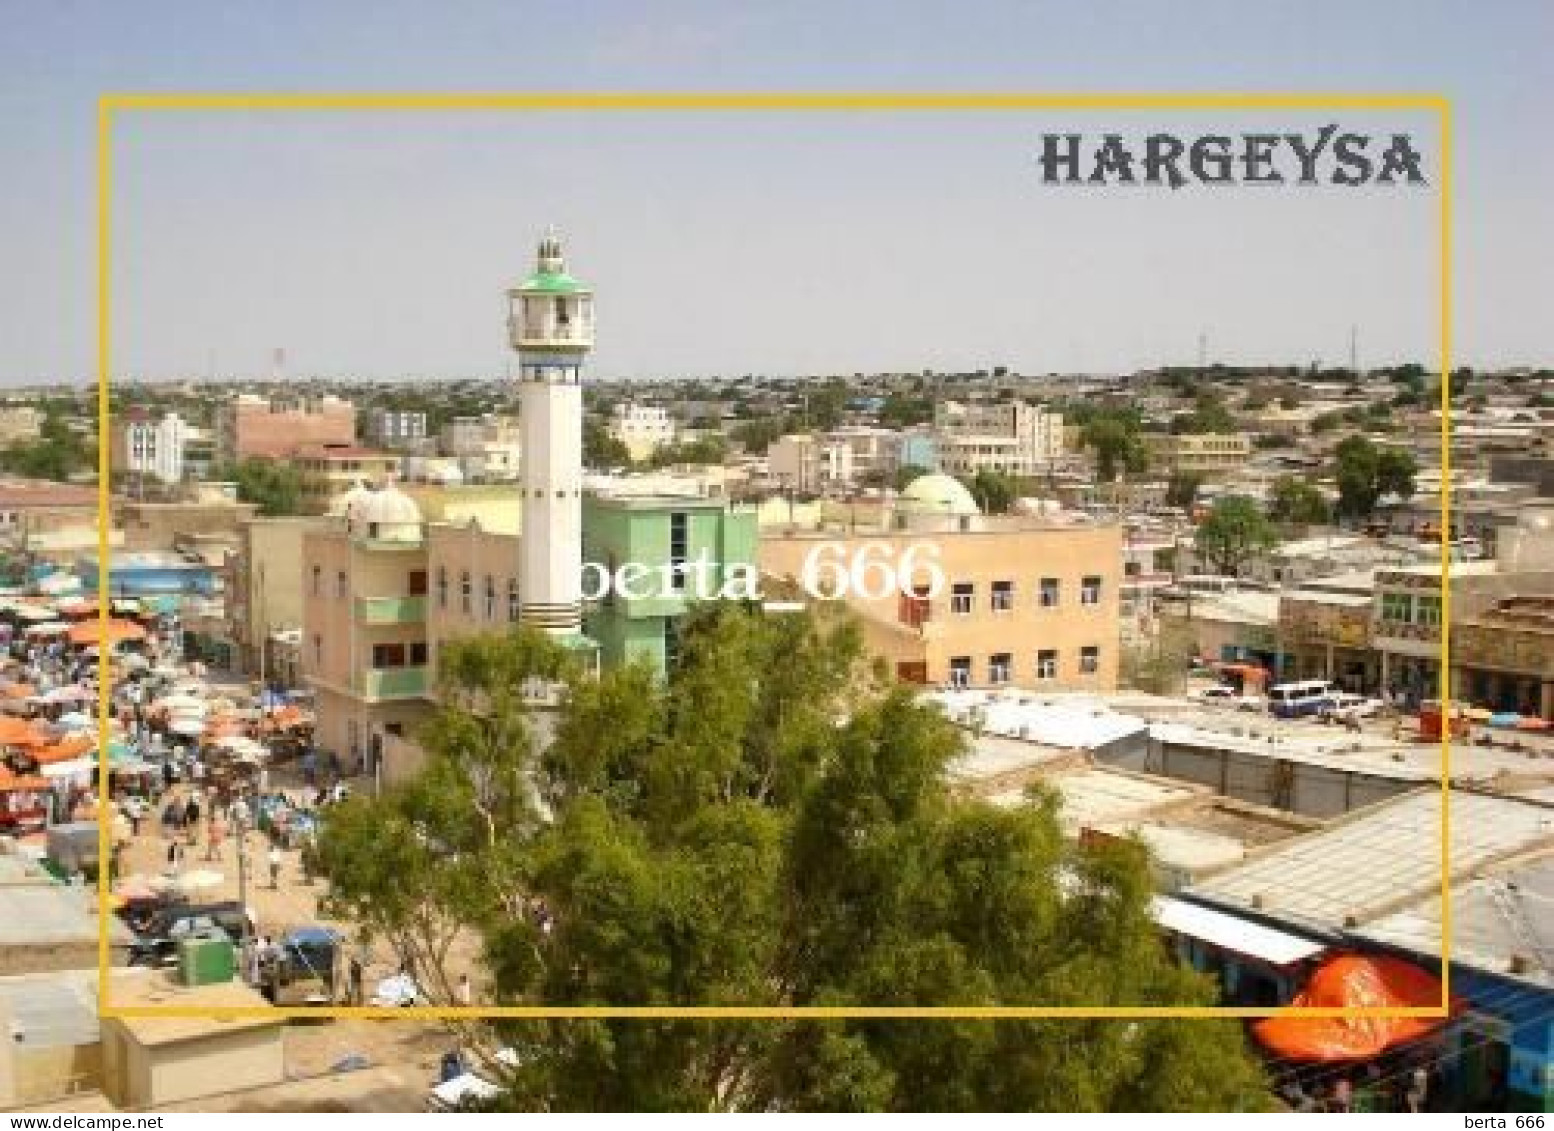 Somalia Somaliland Hargeisa Mosque Hargeysa New Postcard - Somalia